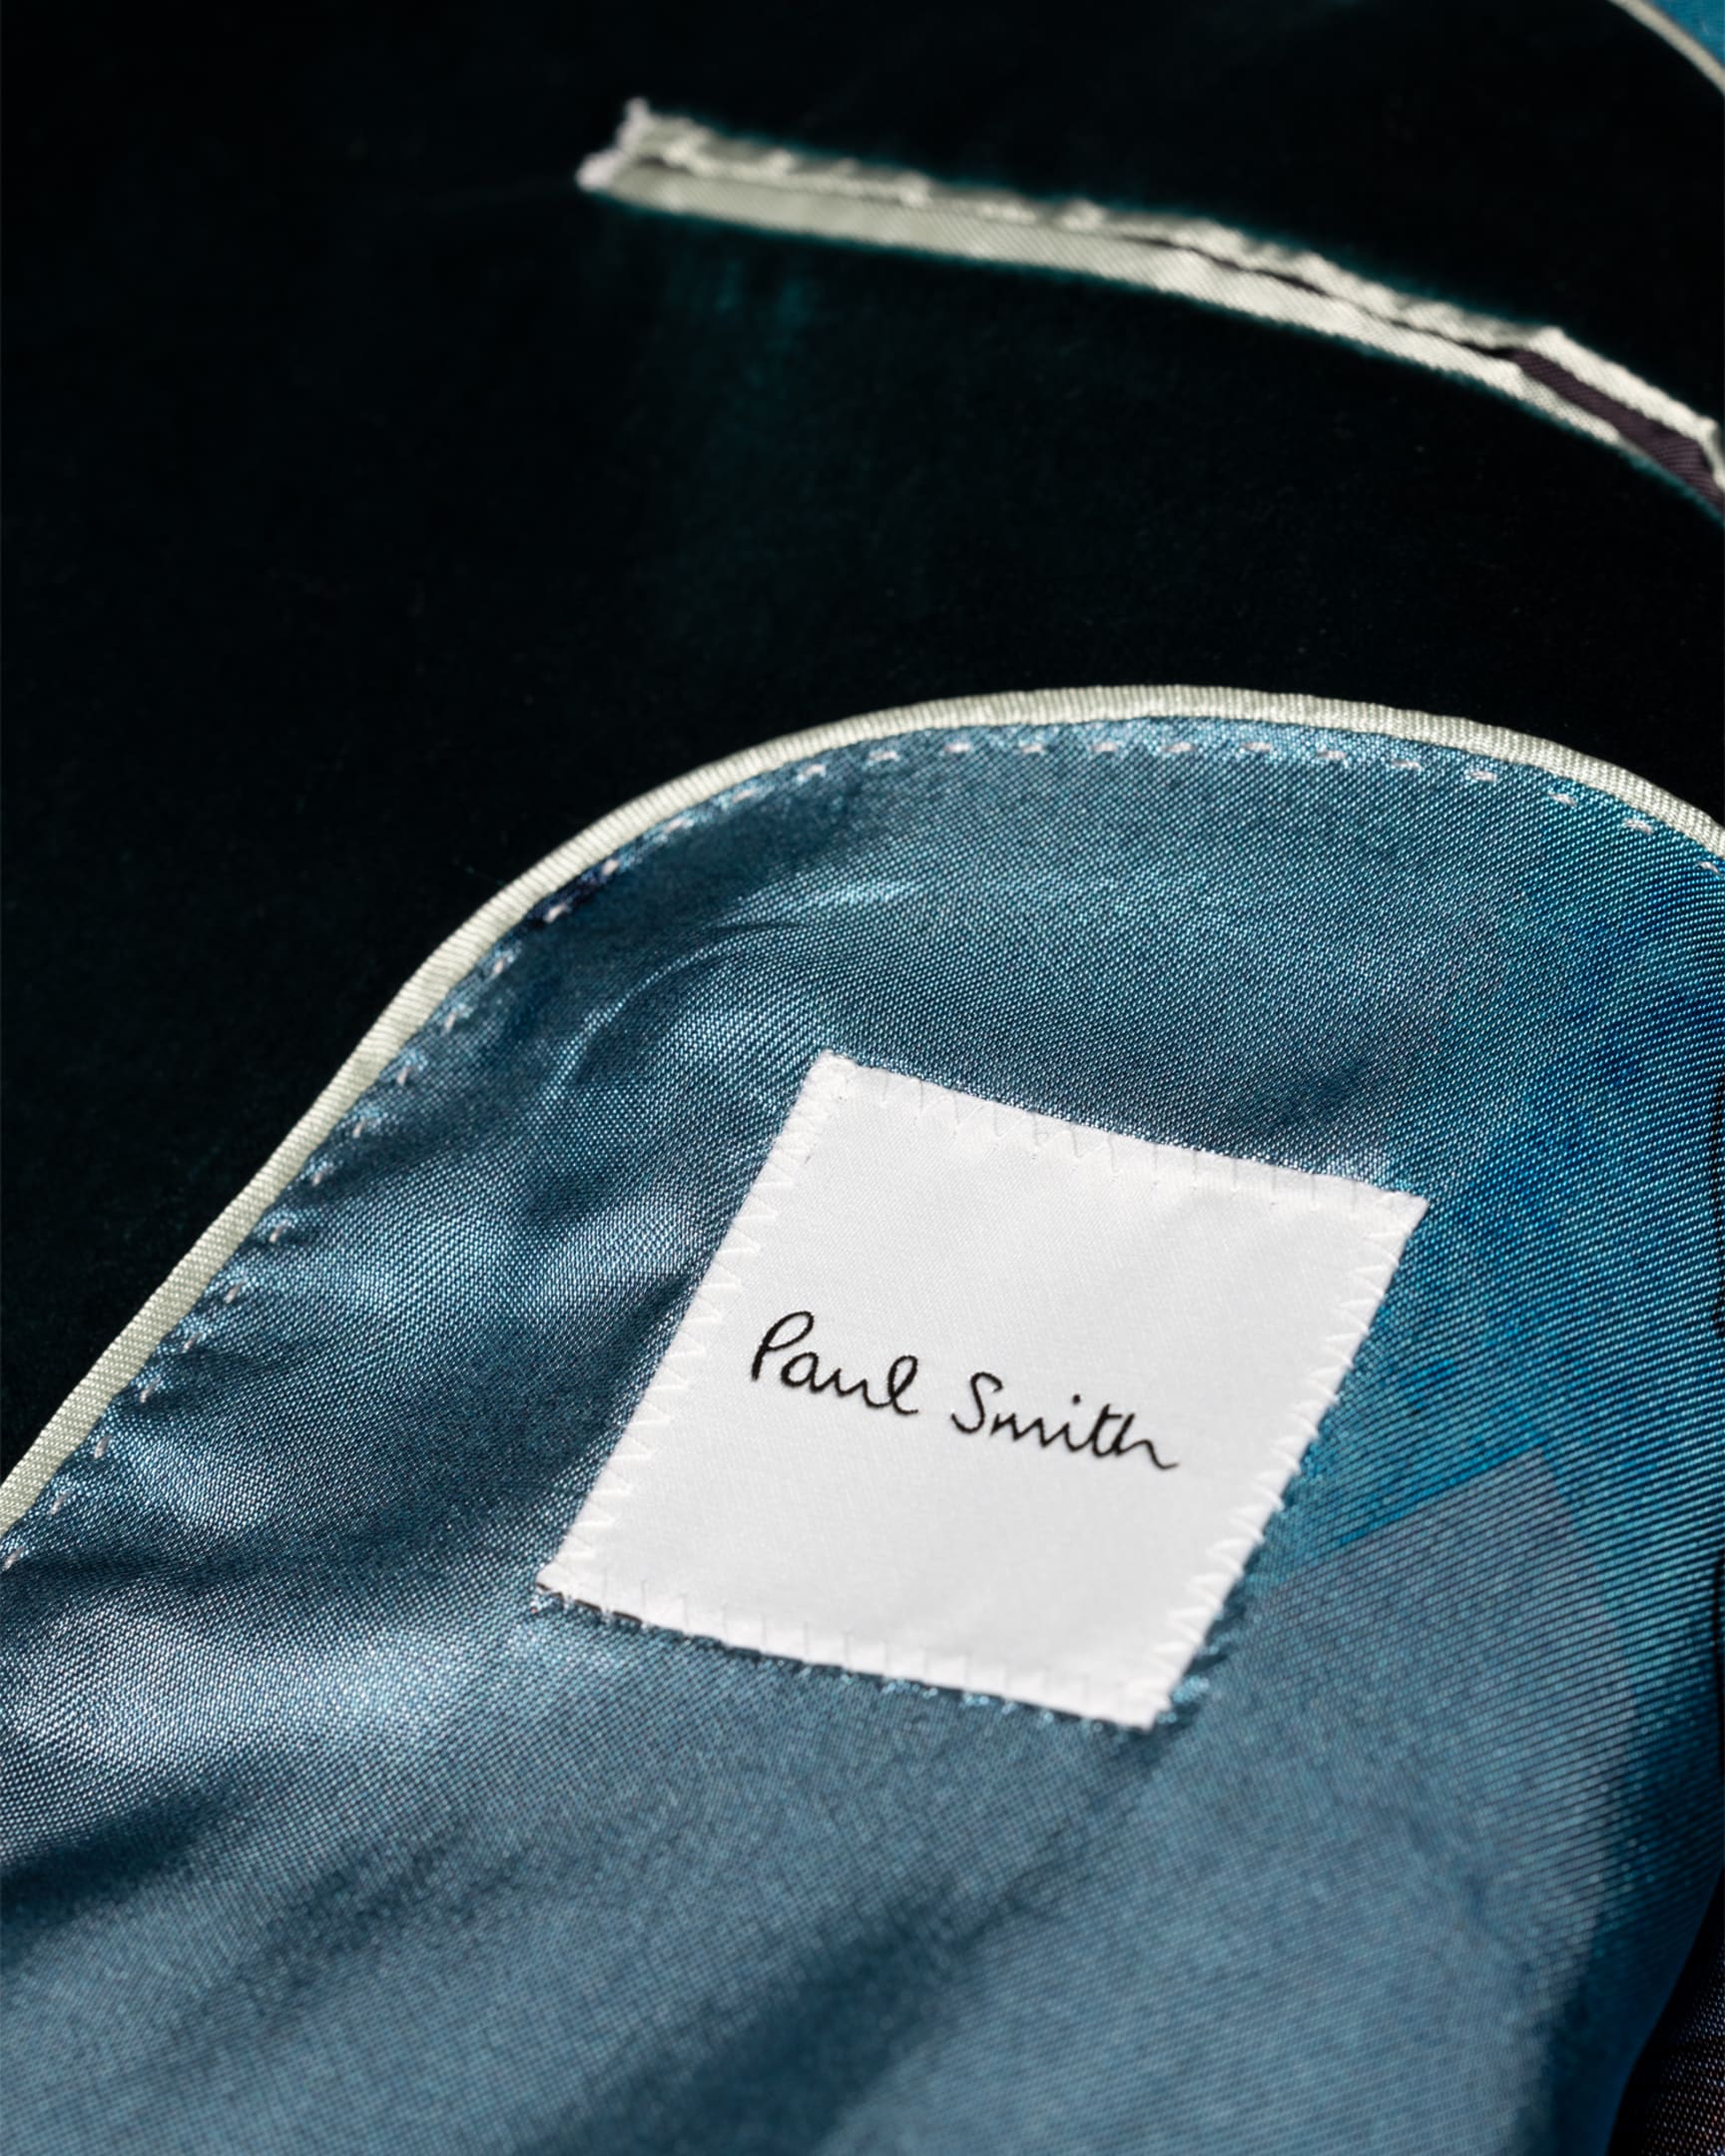 Detail View - Slim-Fit Teal Velvet Evening Blazer Paul Smith